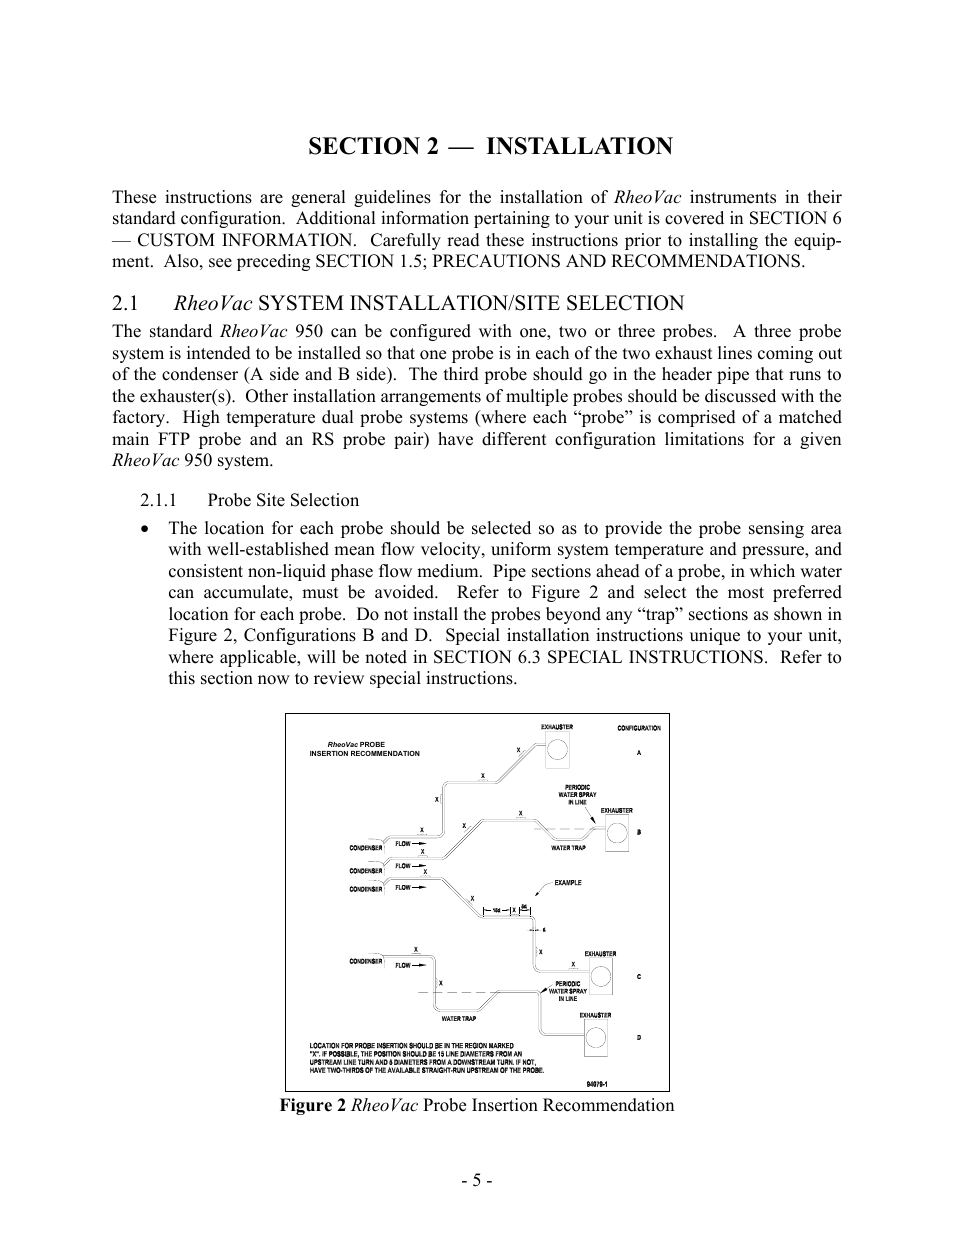 1 rheovac system installation/site selection | Intek RheoVac 950A User Manual | Page 7 / 49